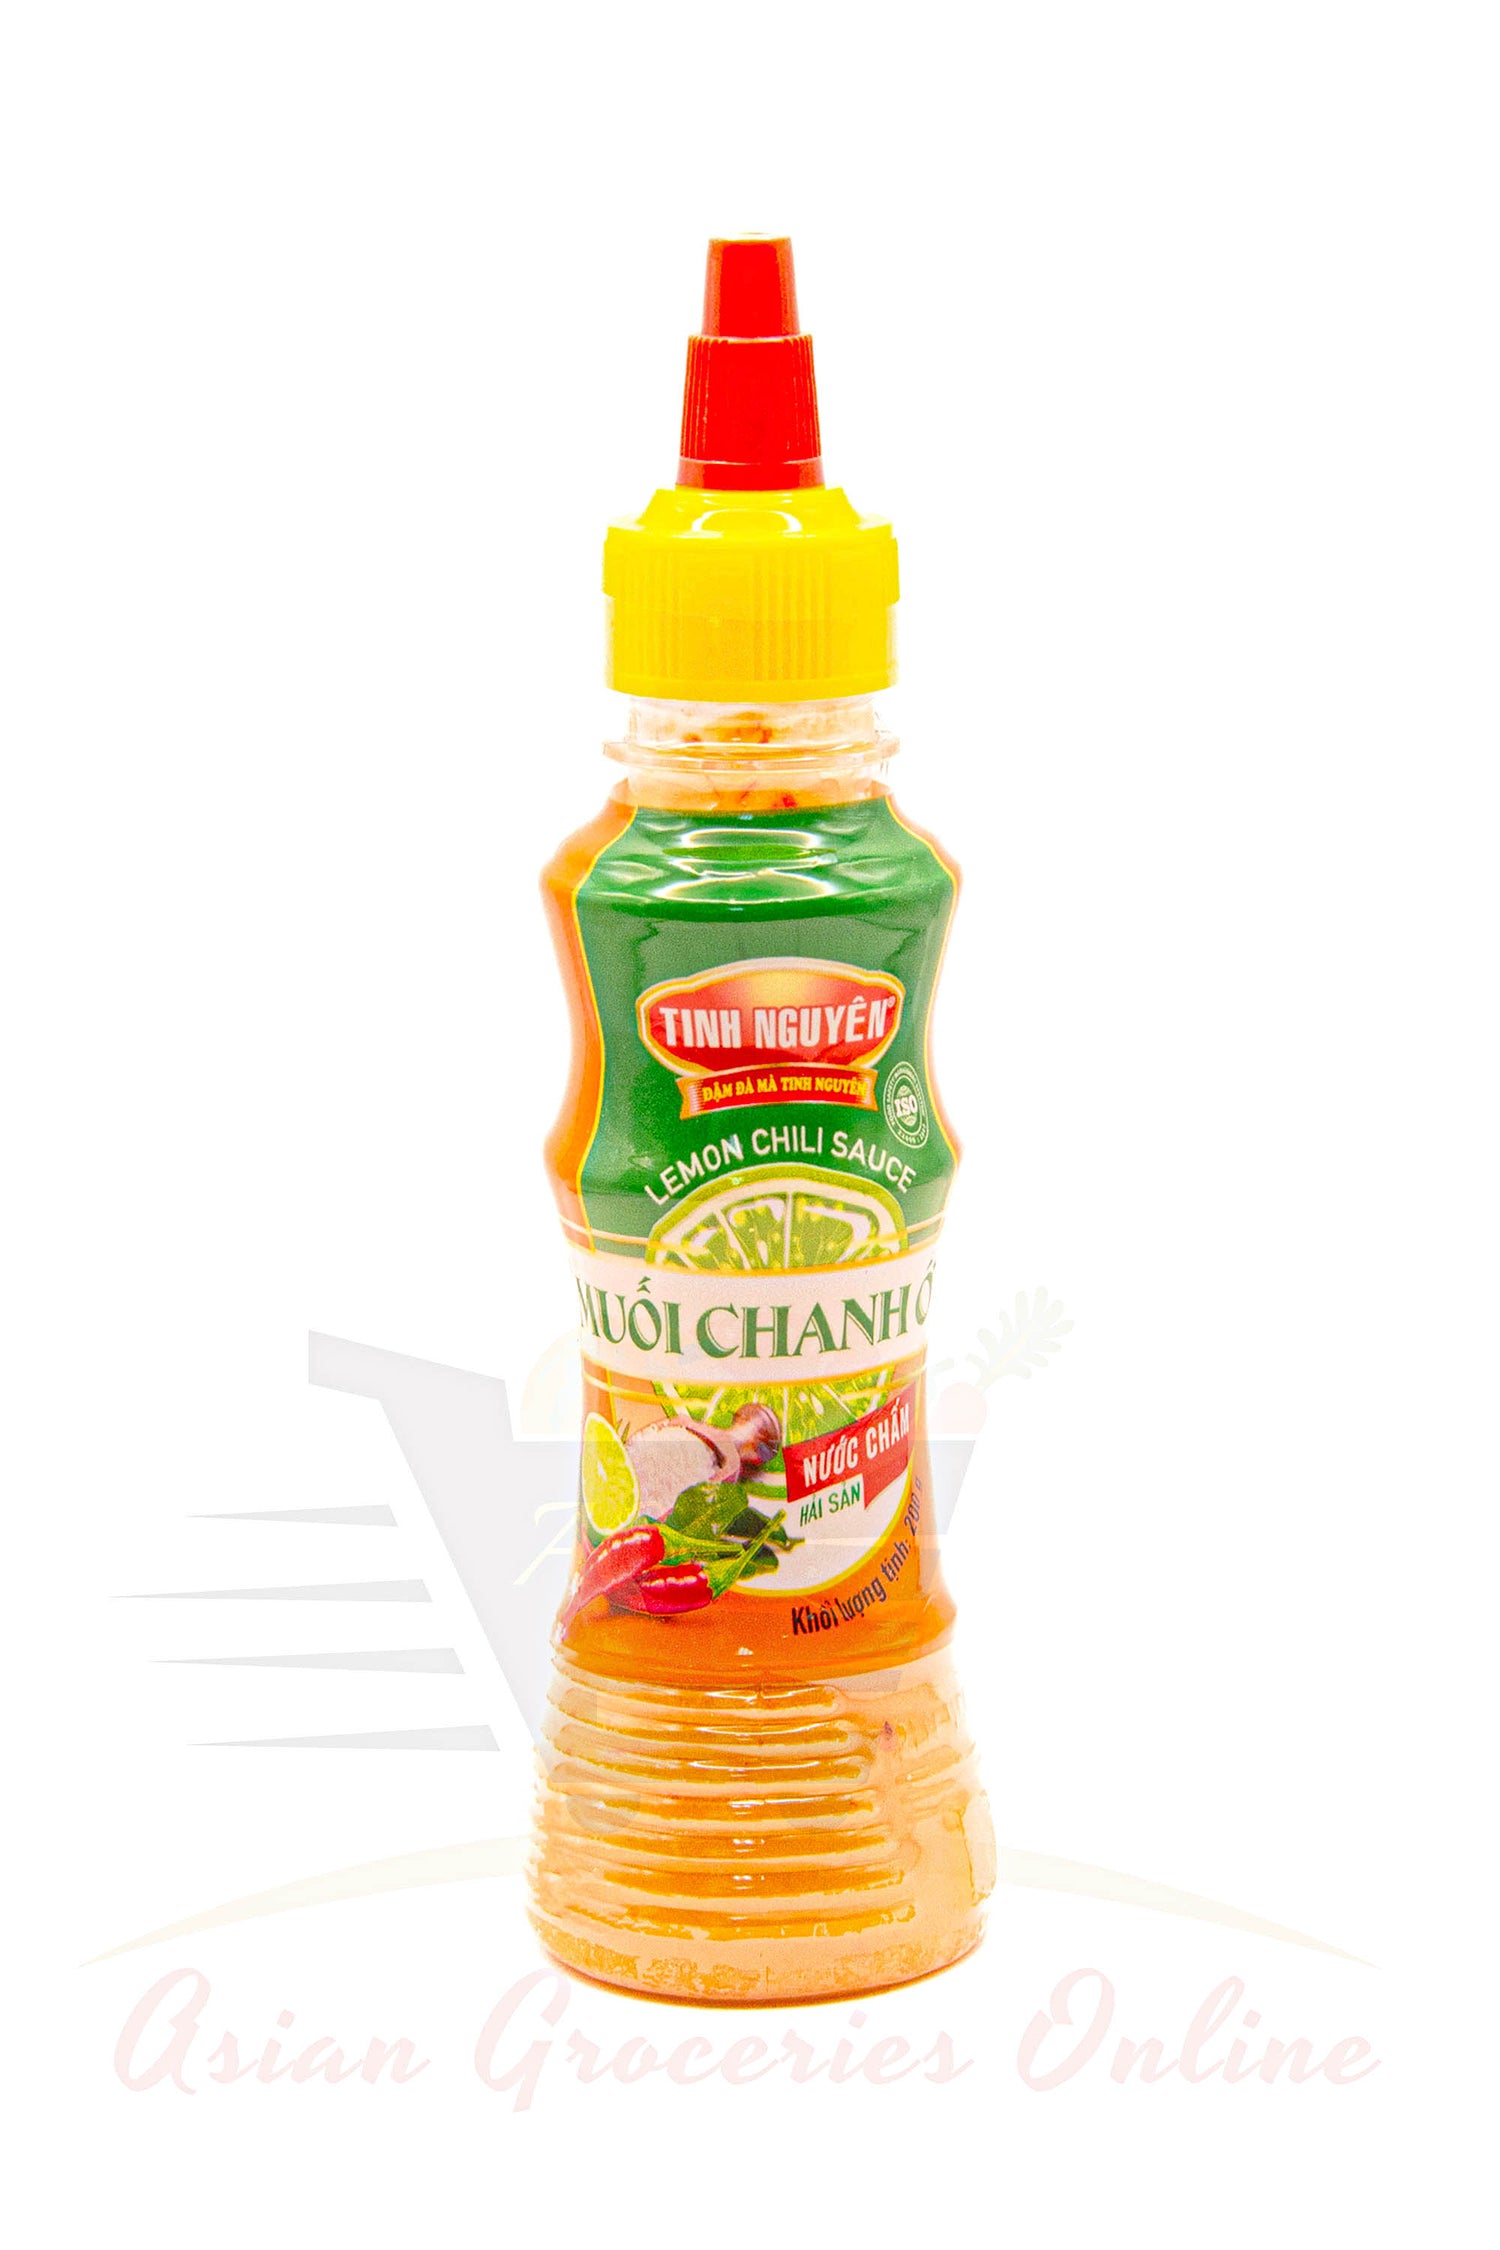 Tinh Nguyen Lemon Red Chili Sauce (Muoi Chanh Ot) 200g *Buy 1 get 1 free*